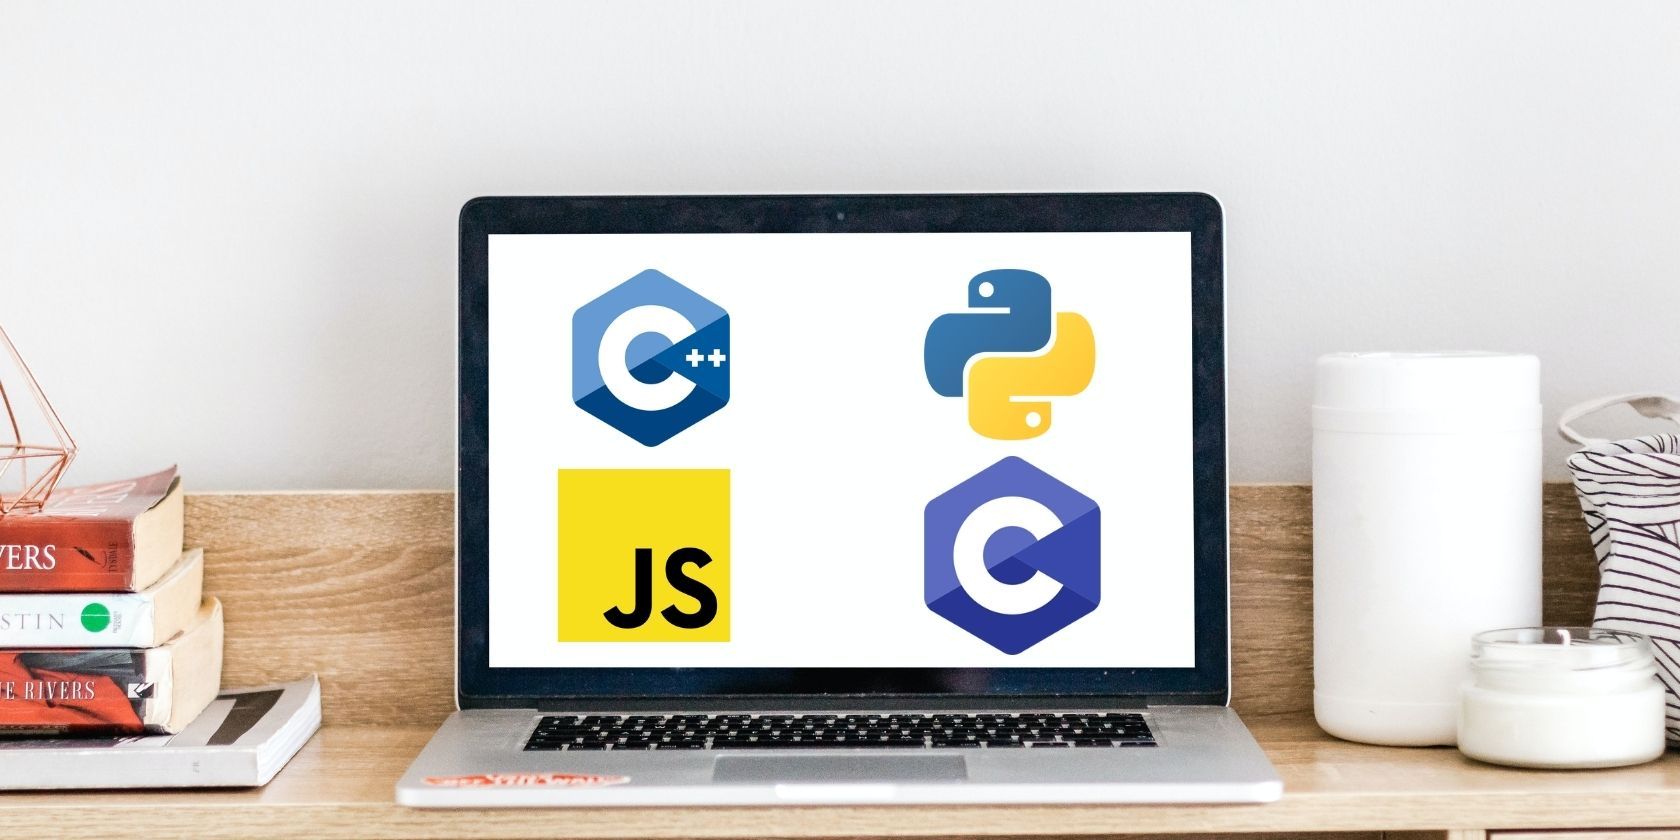 Laptop screen with C++, Python, JavaScript, C